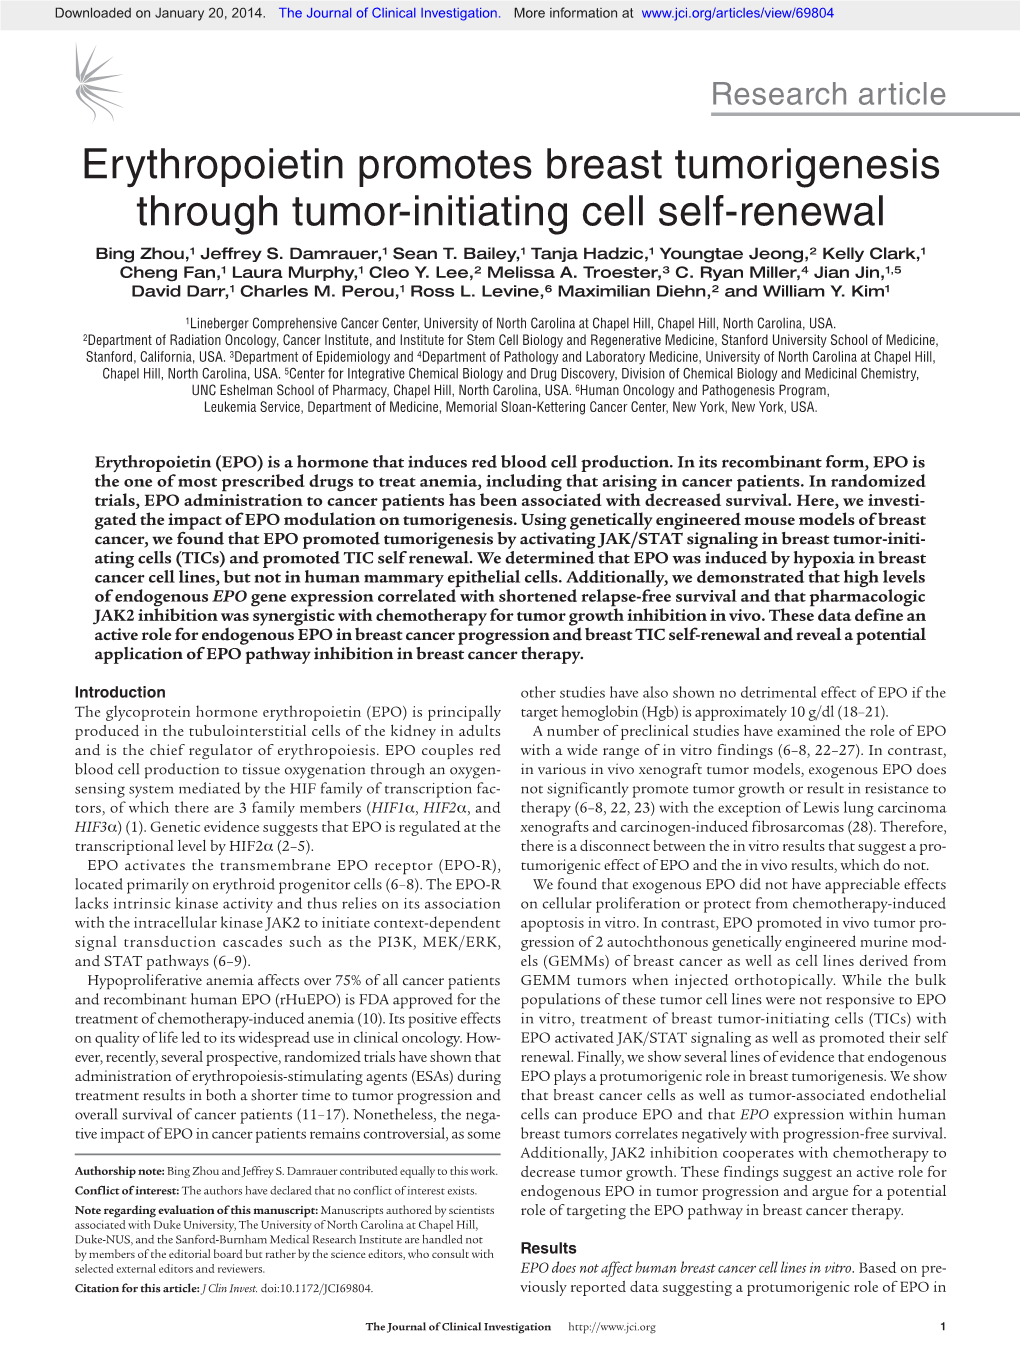 Erythropoietin Promotes Breast Tumorigenesis Through Tumor-Initiating Cell Self-Renewal Bing Zhou,1 Jeffrey S